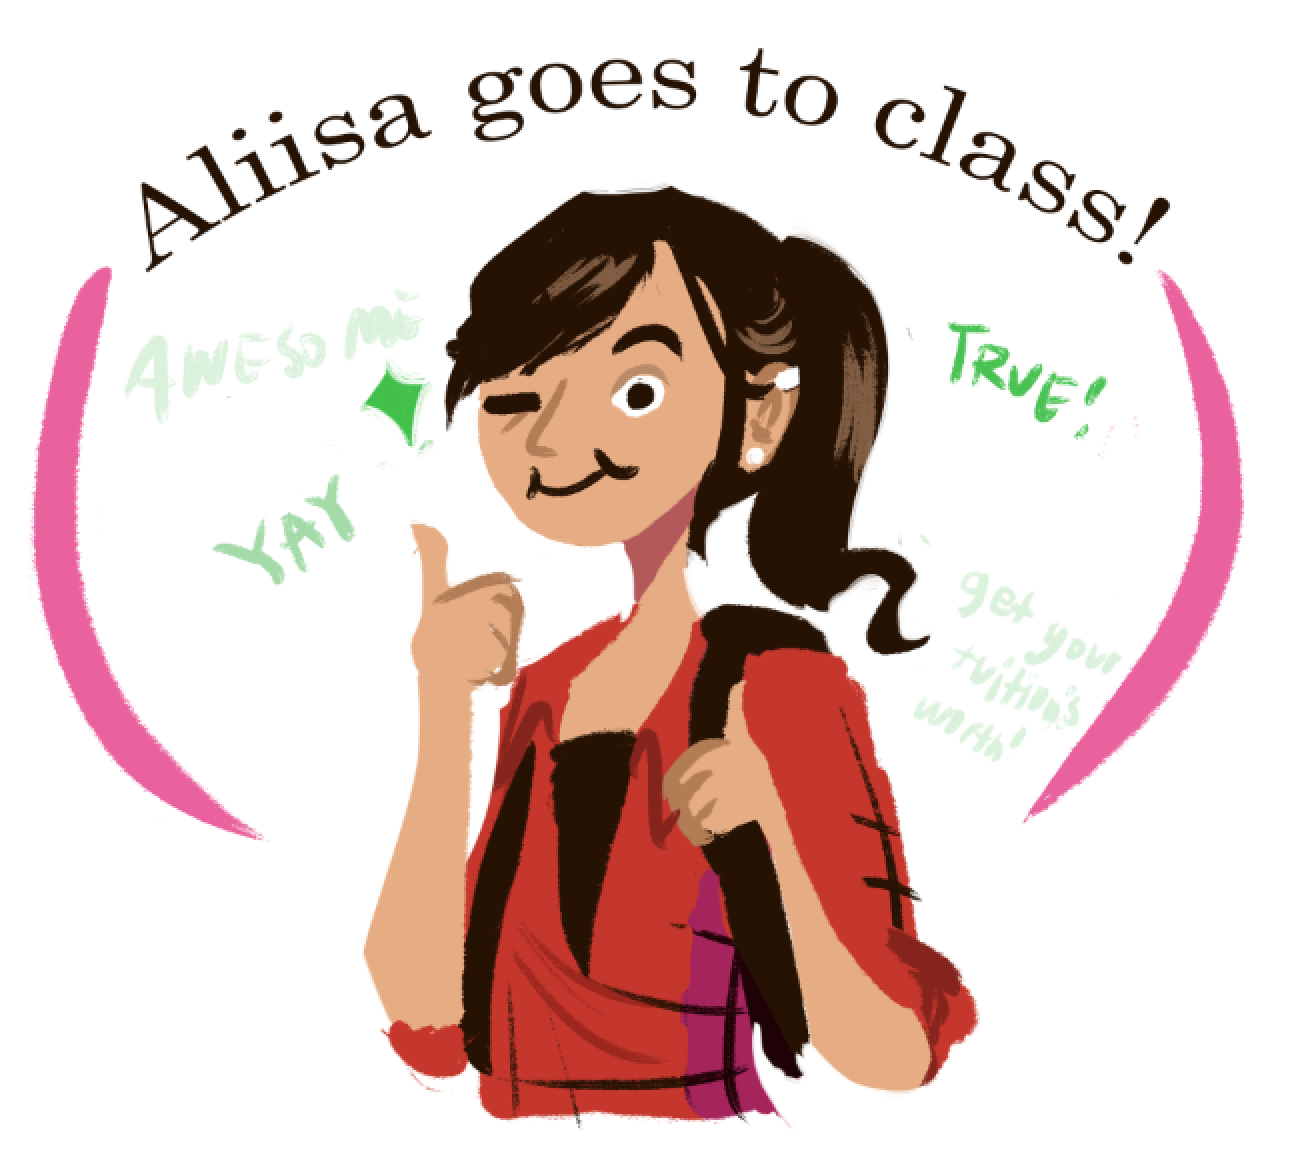 aliisa goes to school